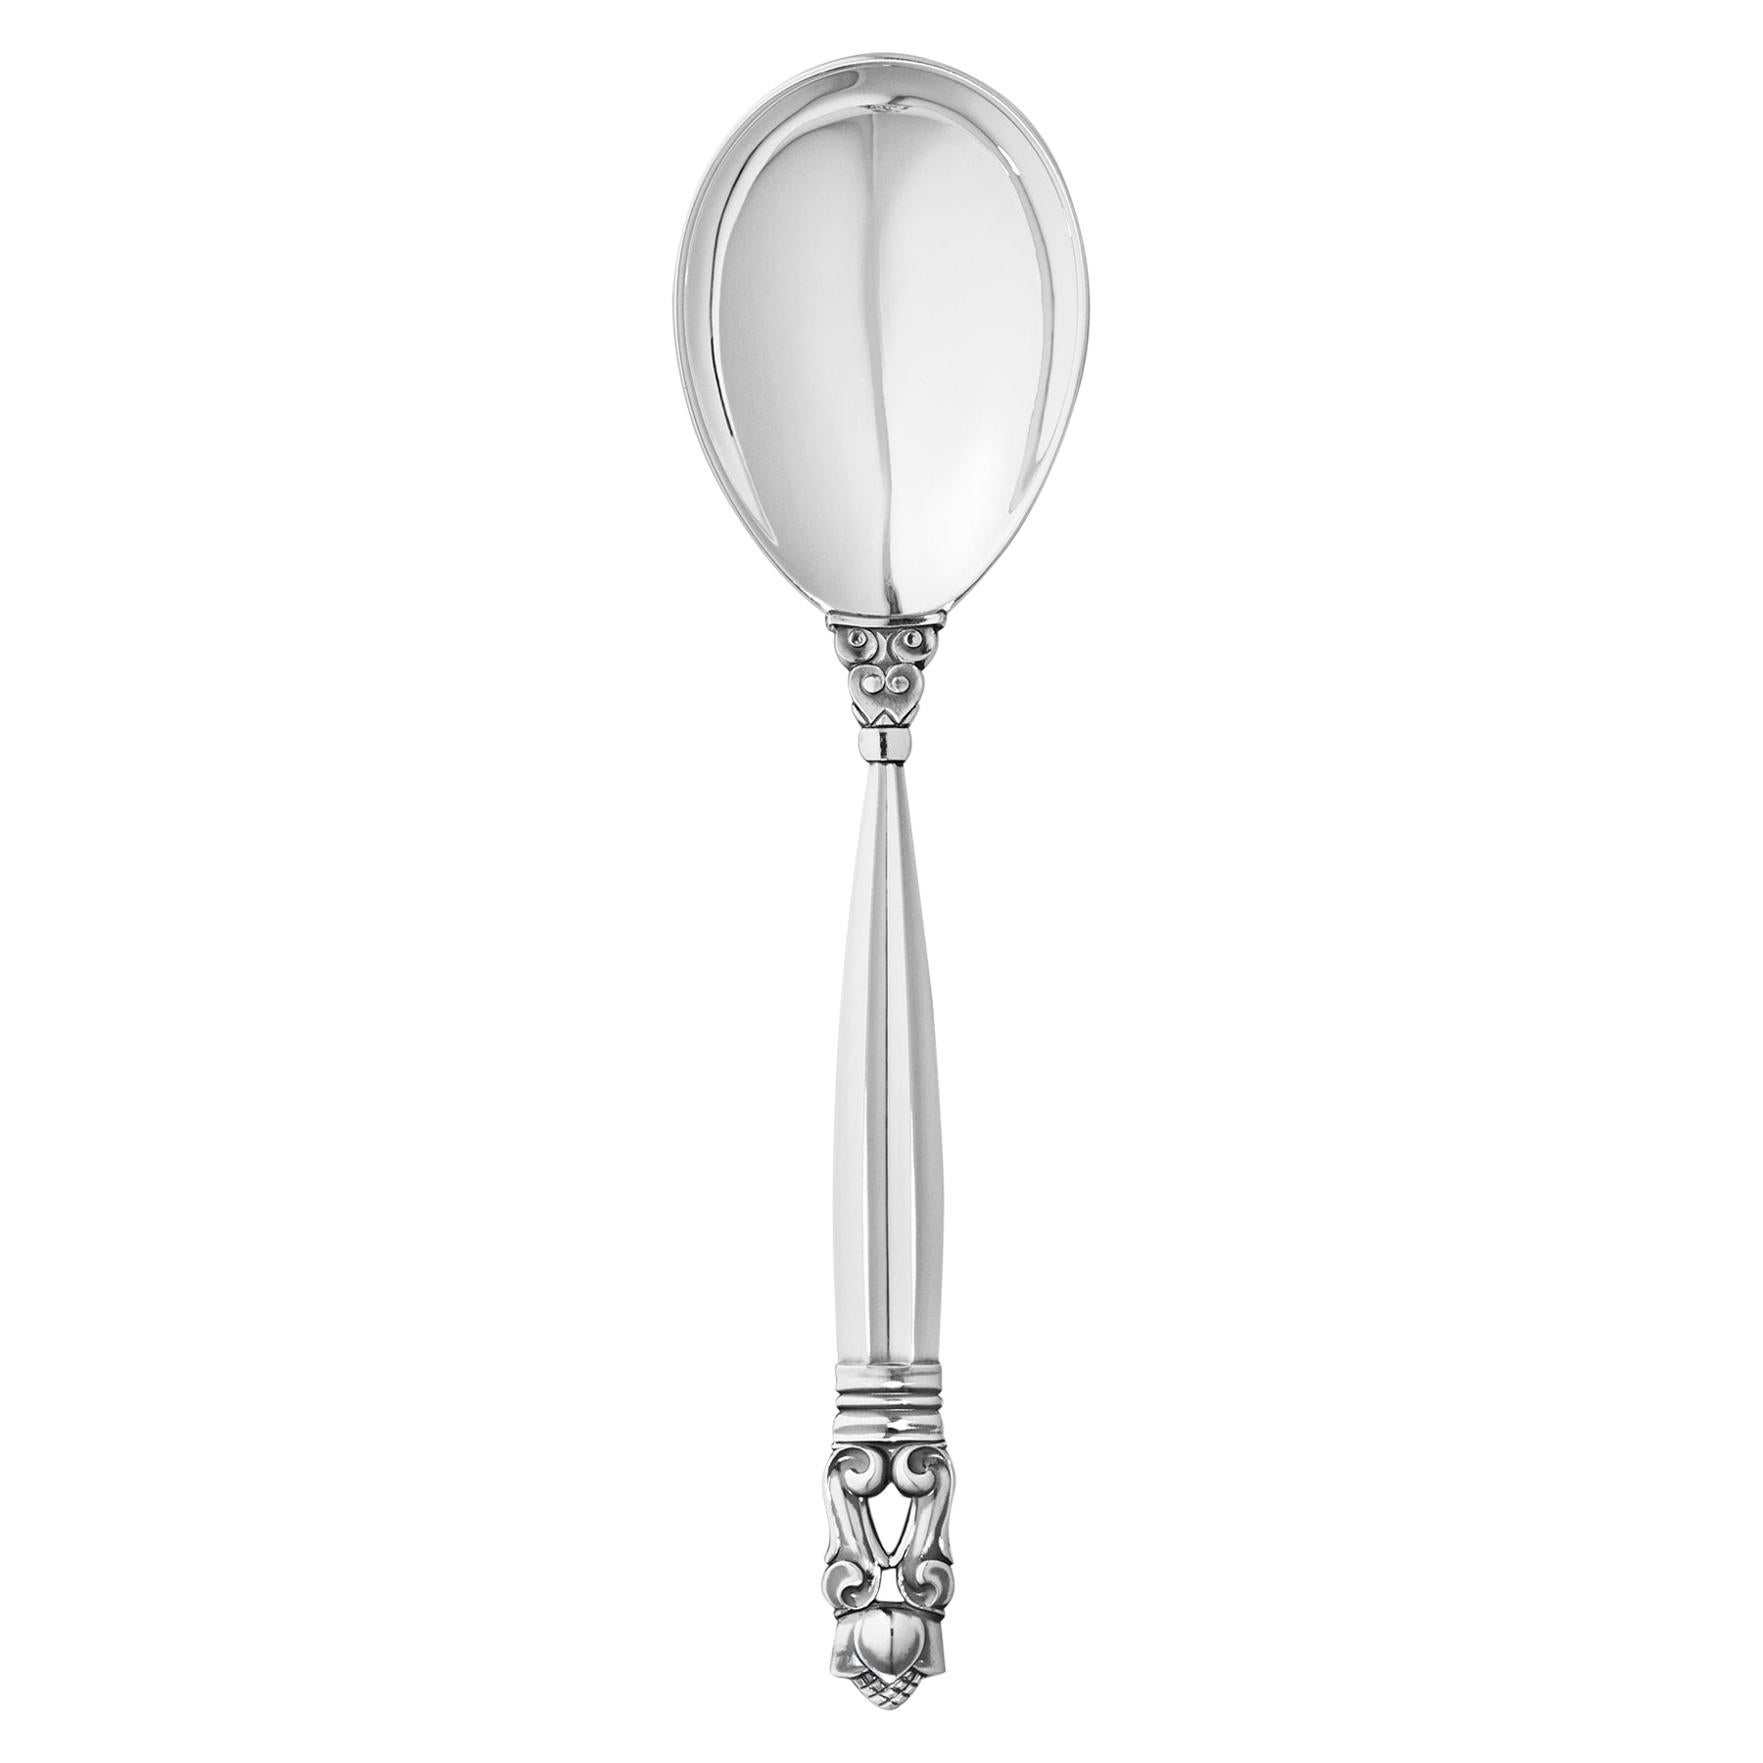 Georg Jensen Handcrafted Sterling Silver Acorn Jam Spoon by Johan Rohde